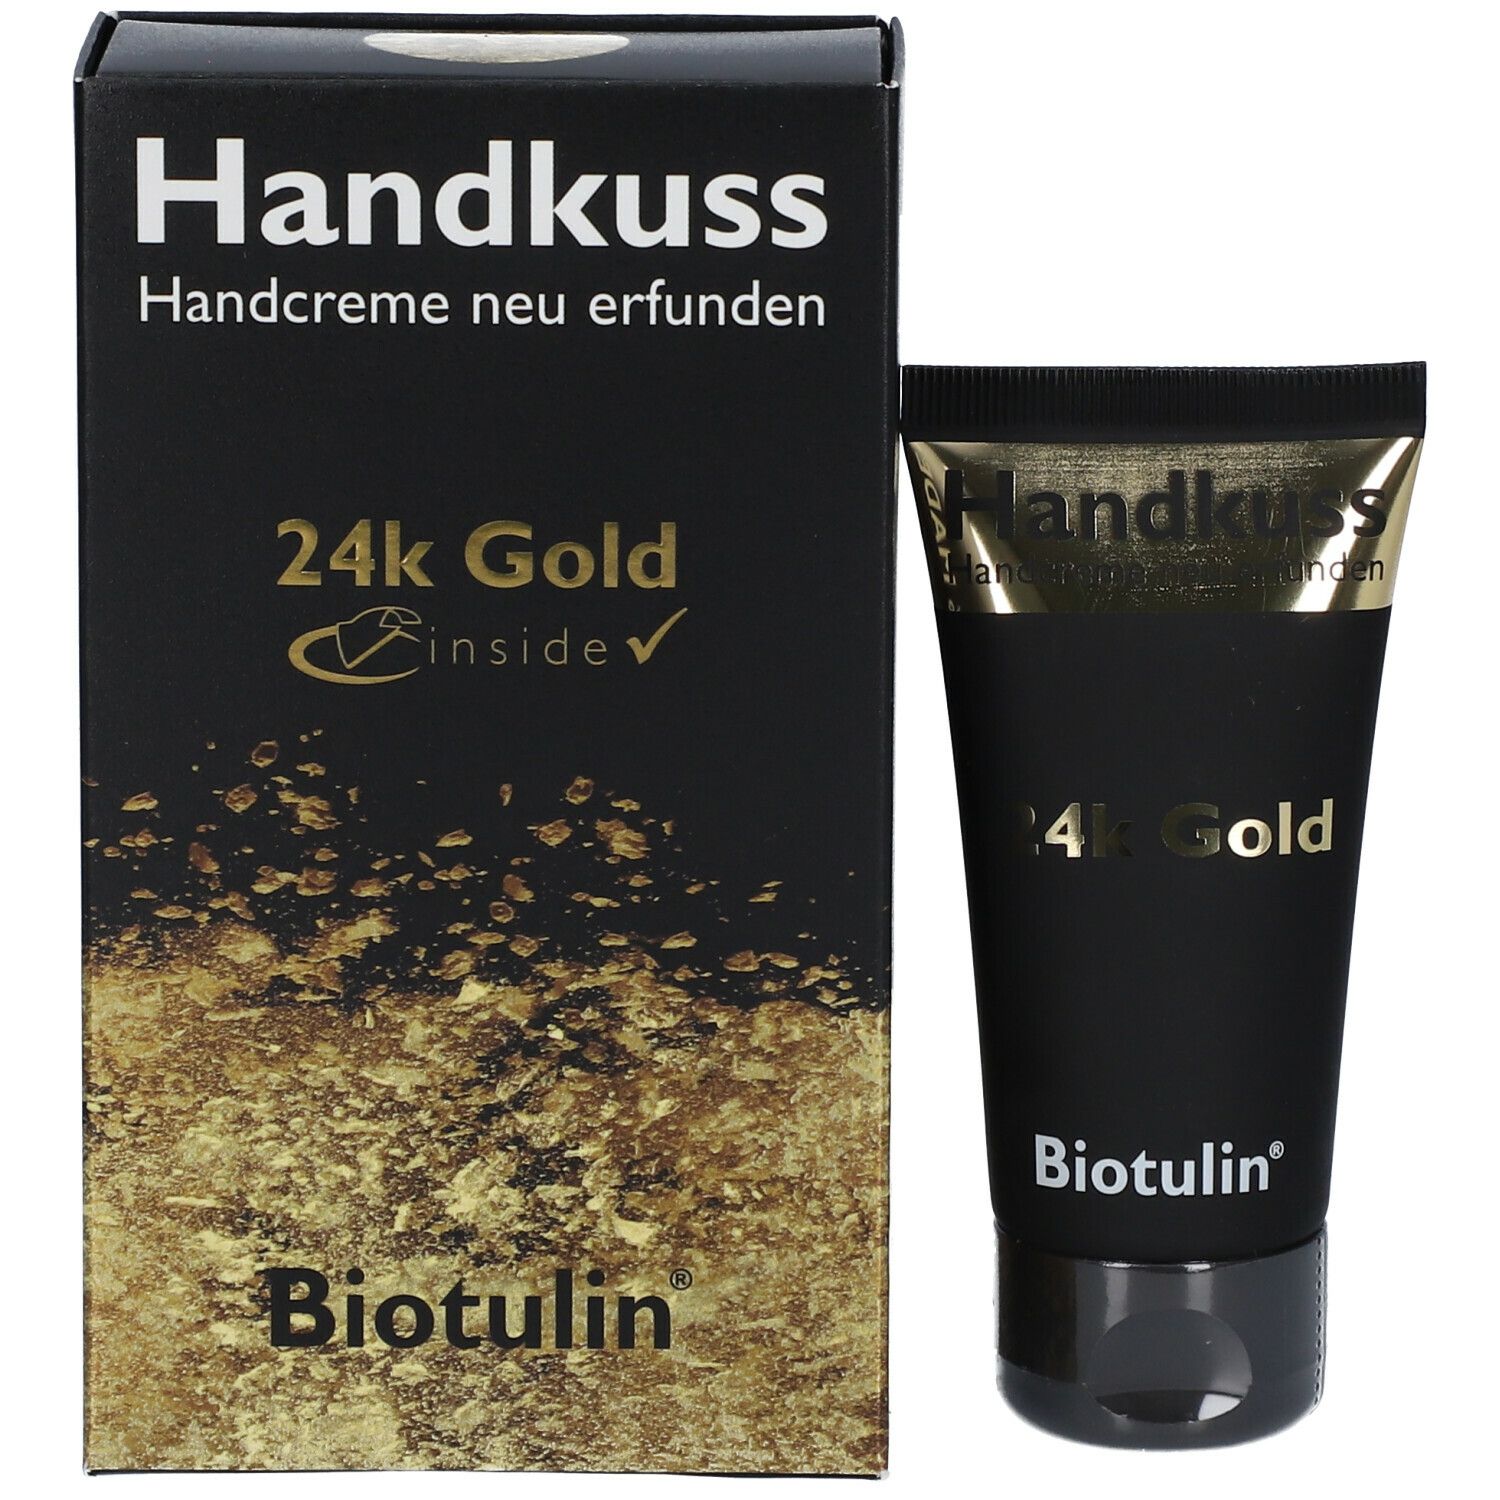 Biotulin® Handkuss: Handcreme neu erfunden